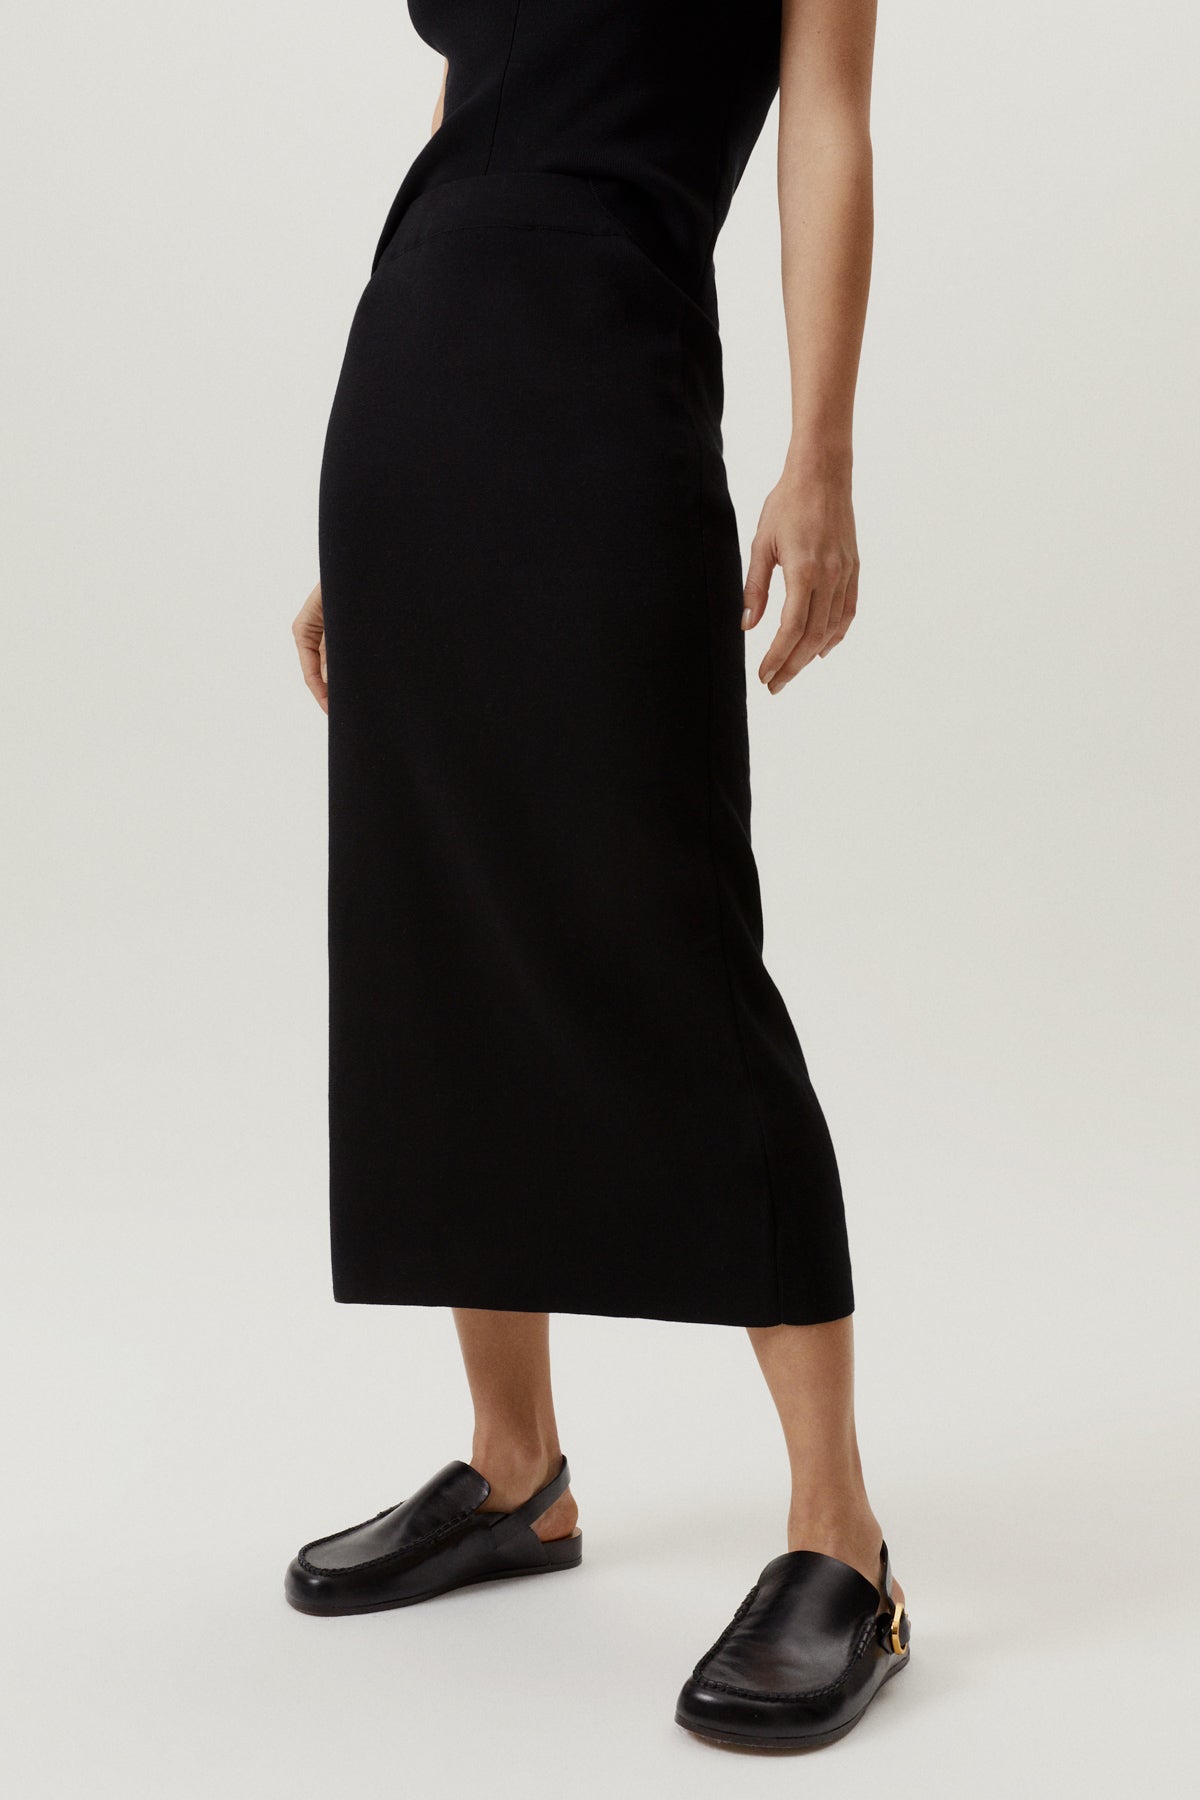 Black | The Organic Cotton Straight Skirt